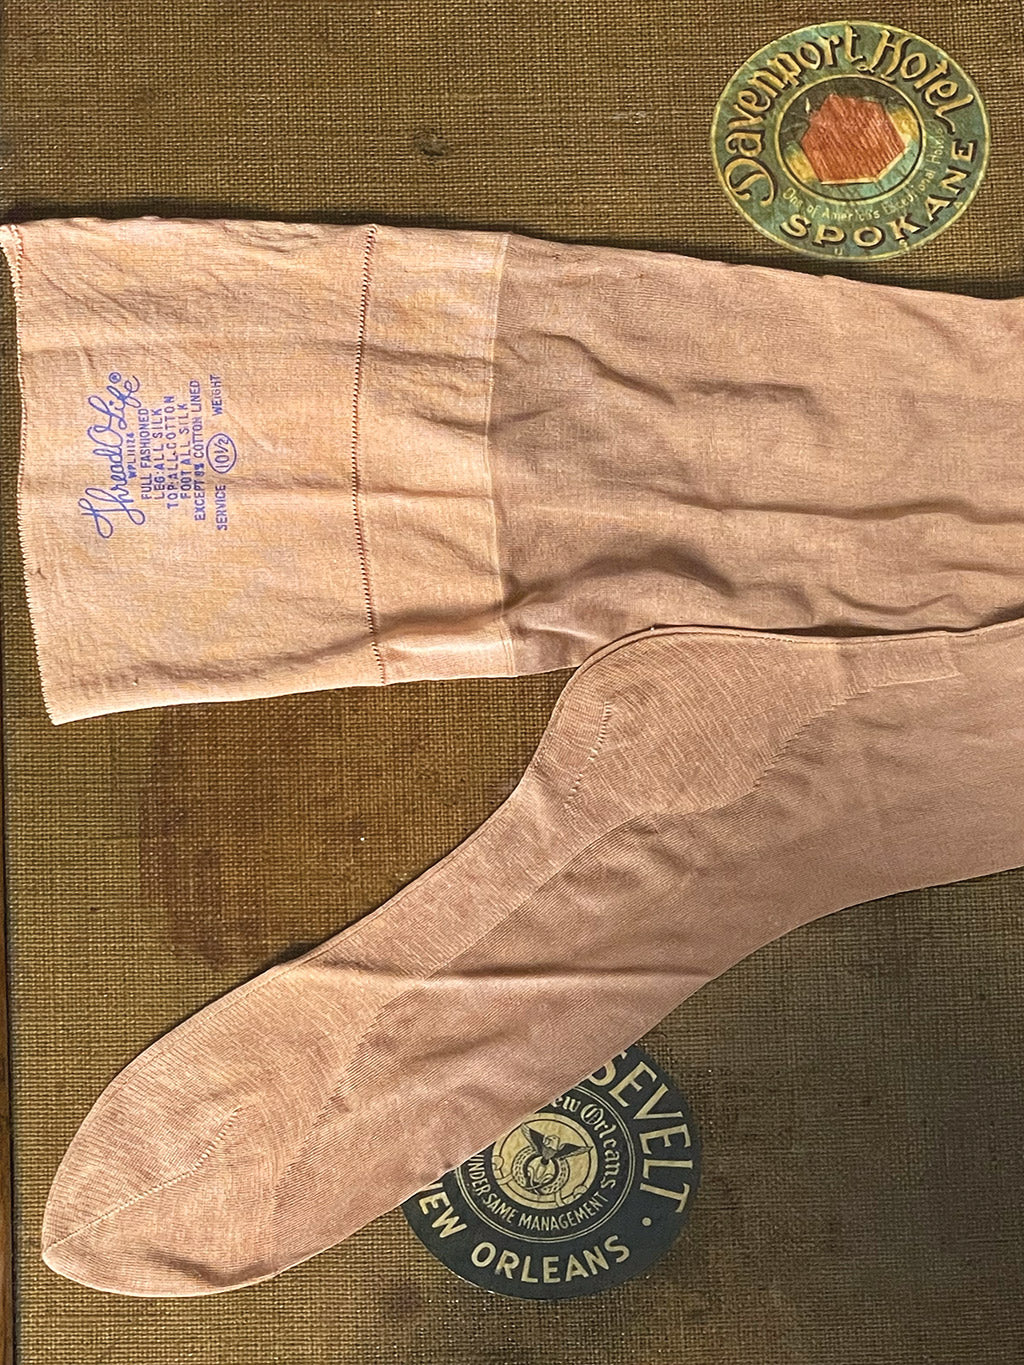 Vintage Thread O Life Silk Fully Fashioned Stockings stocking welt